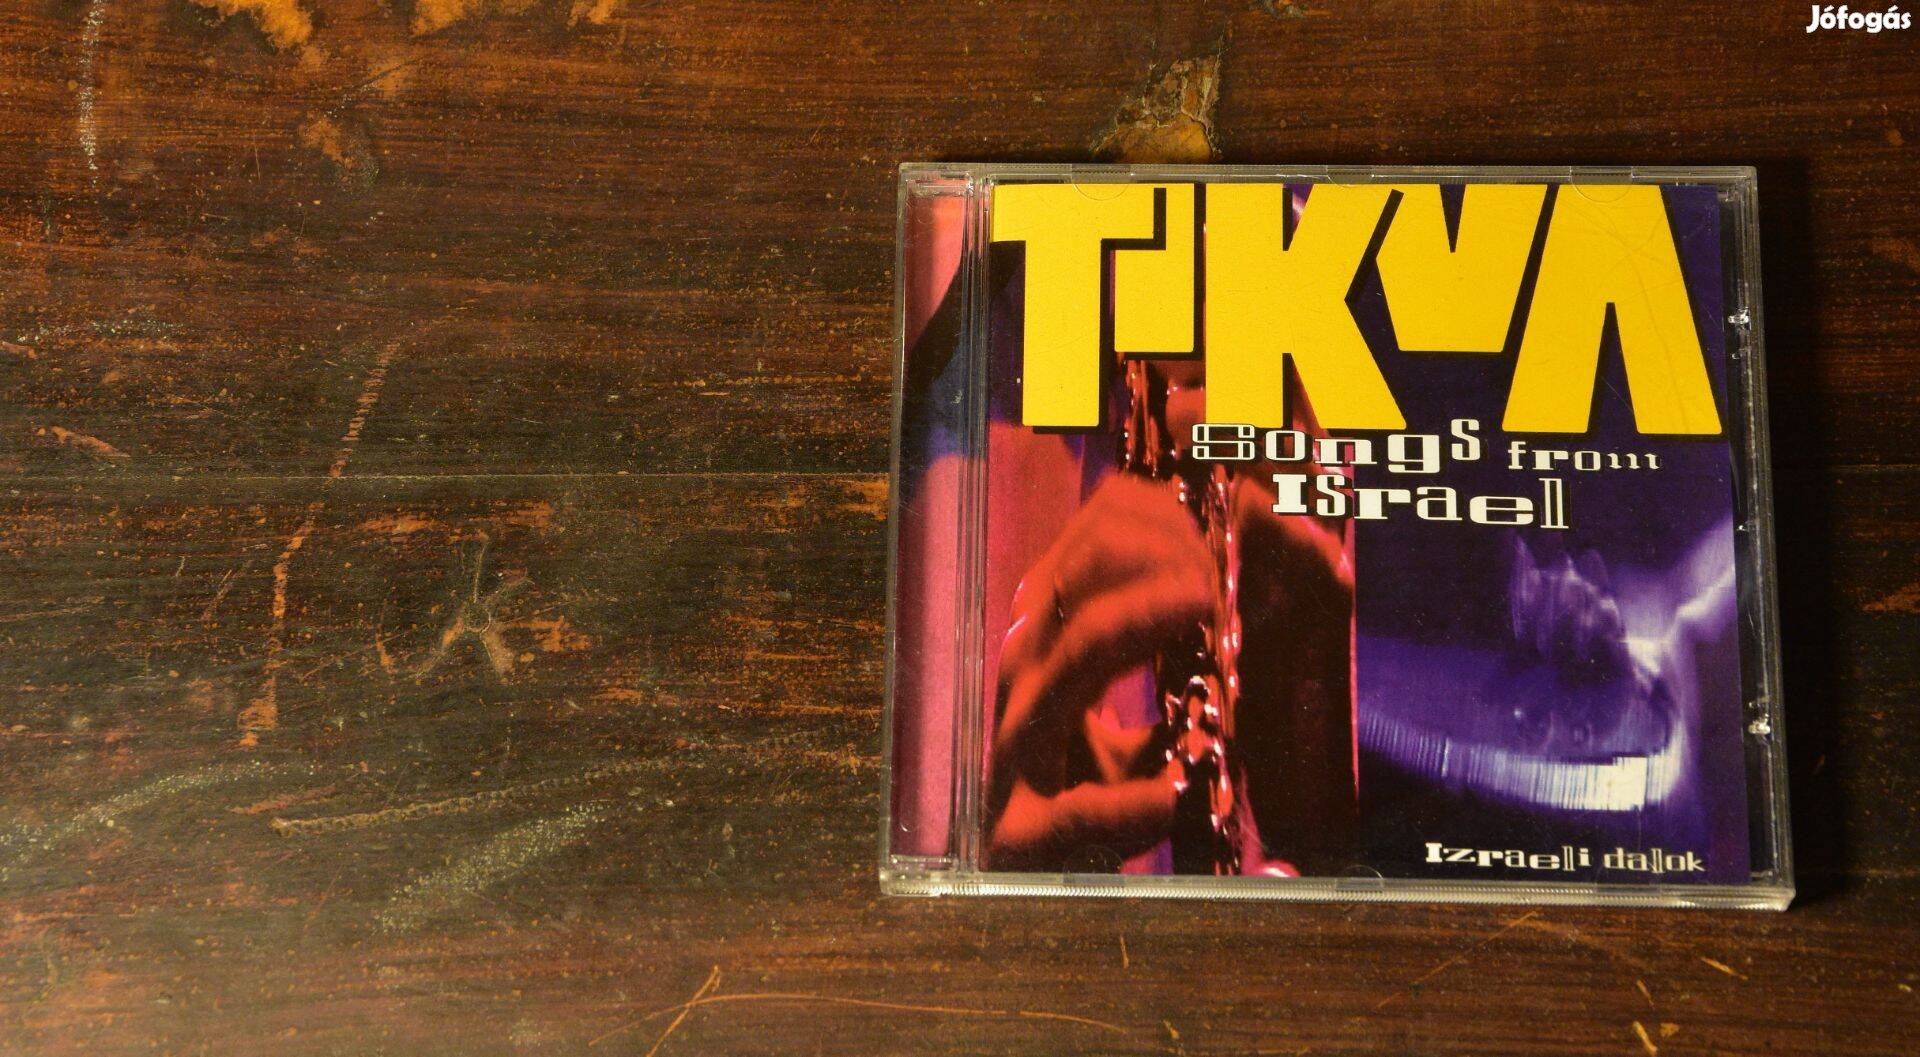 CD Tikva Songs from Israel